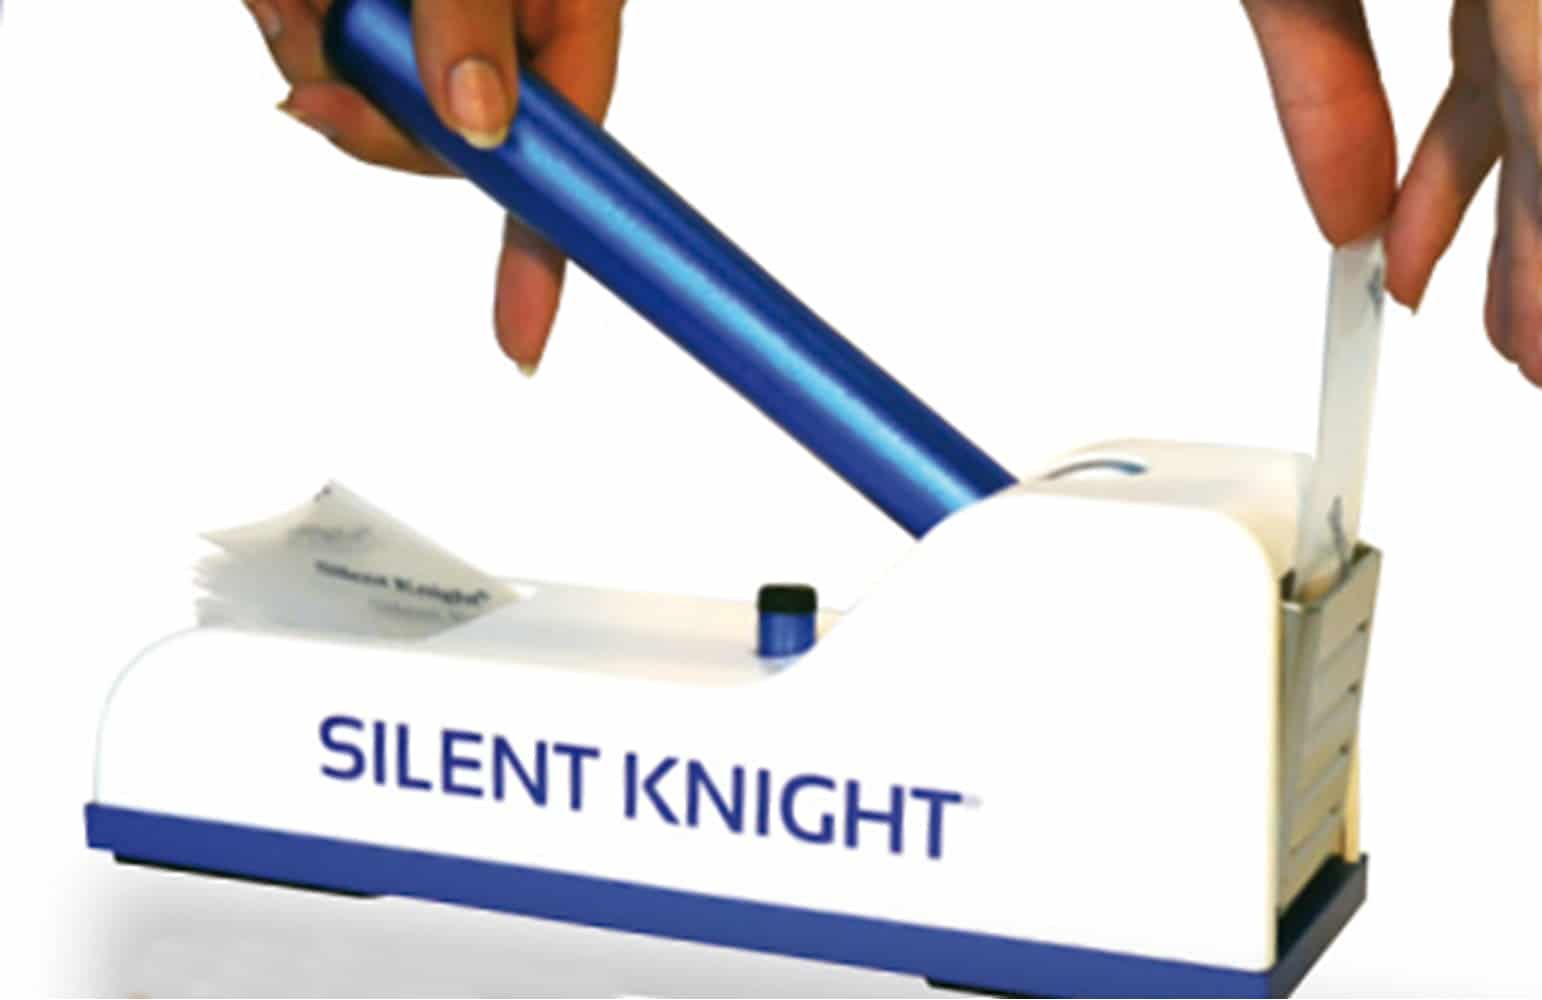 Trita pastiglie professionale Silent Knight - CSLmedical